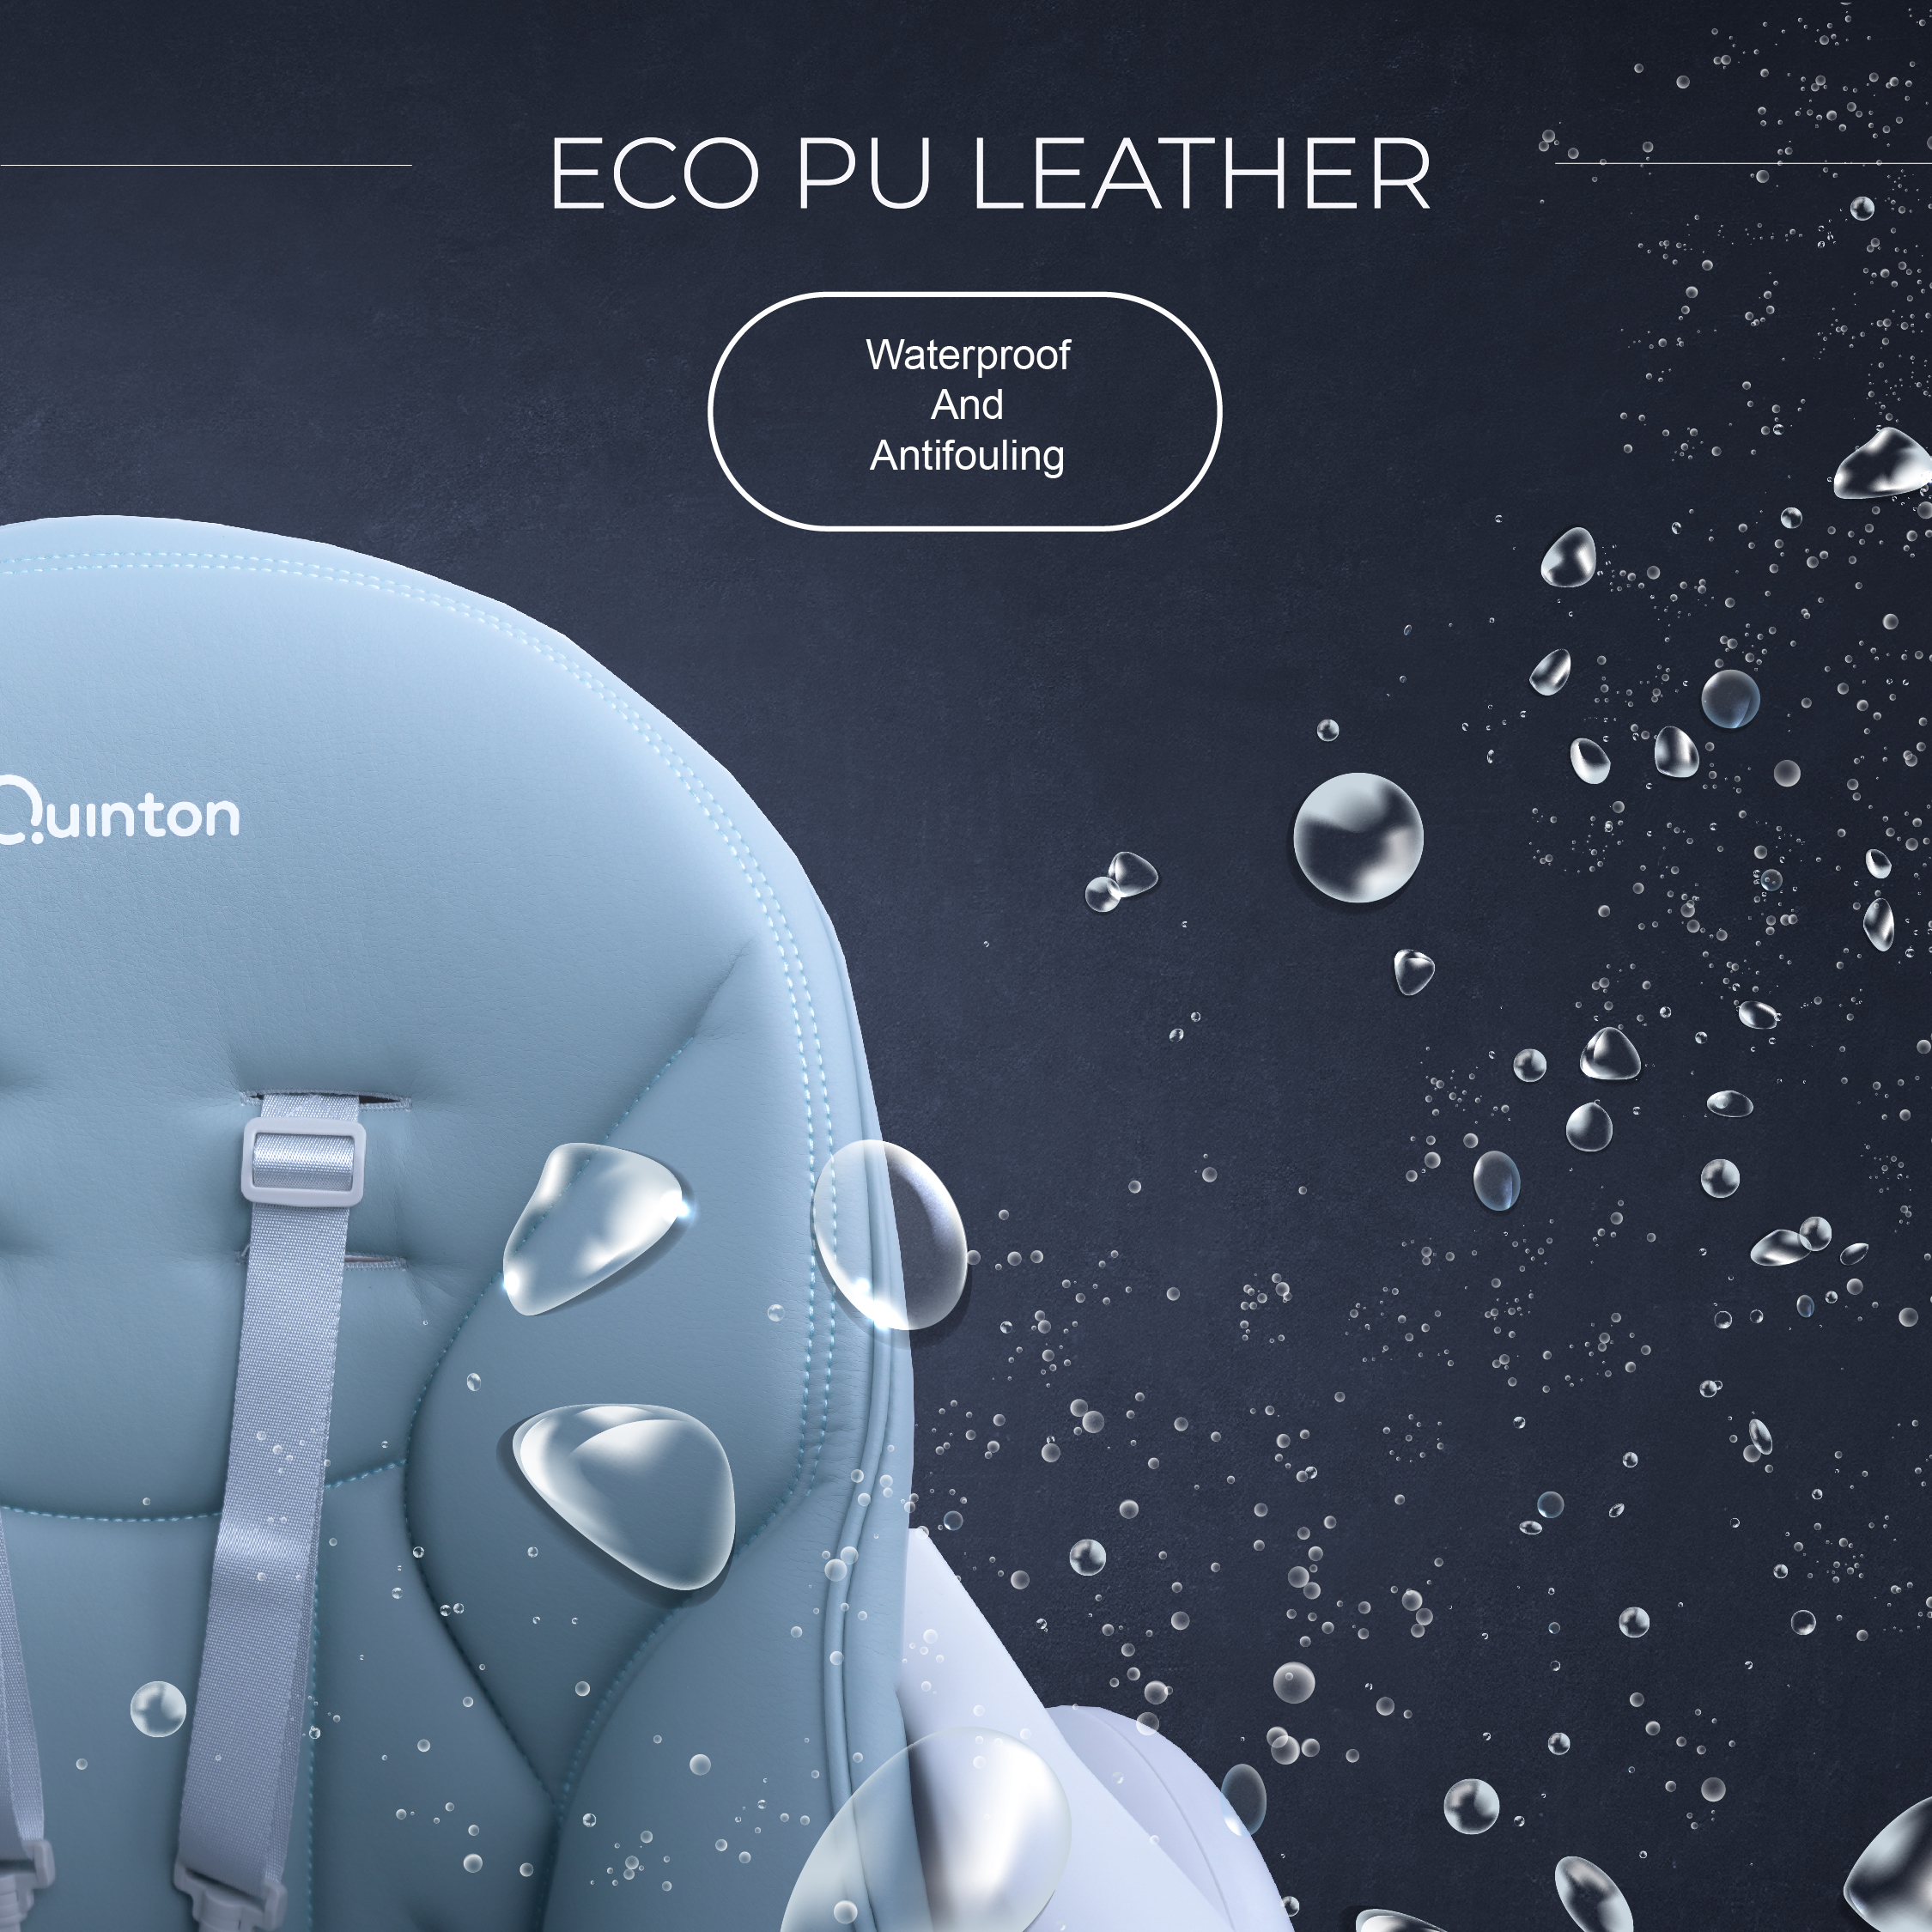 Eco Pu Leather